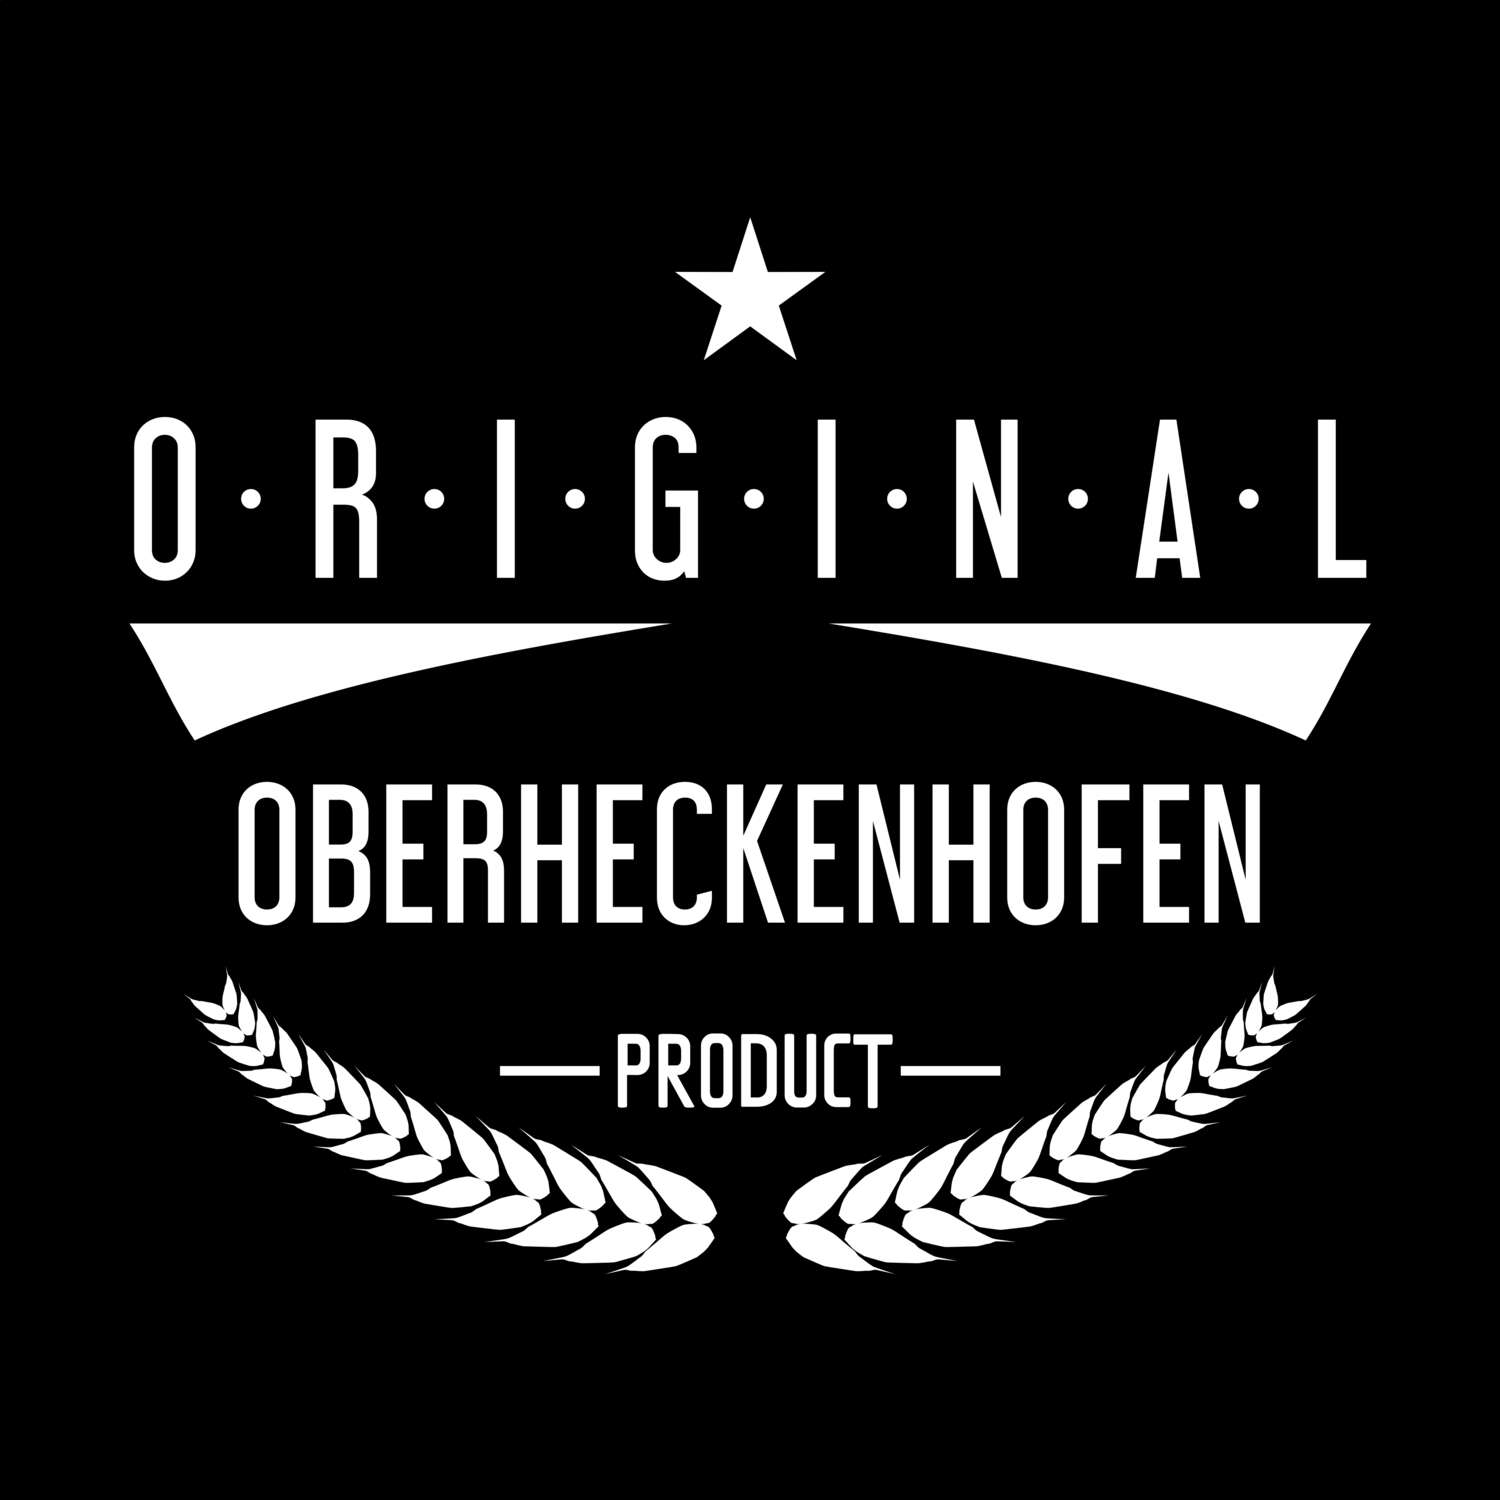 Oberheckenhofen T-Shirt »Original Product«